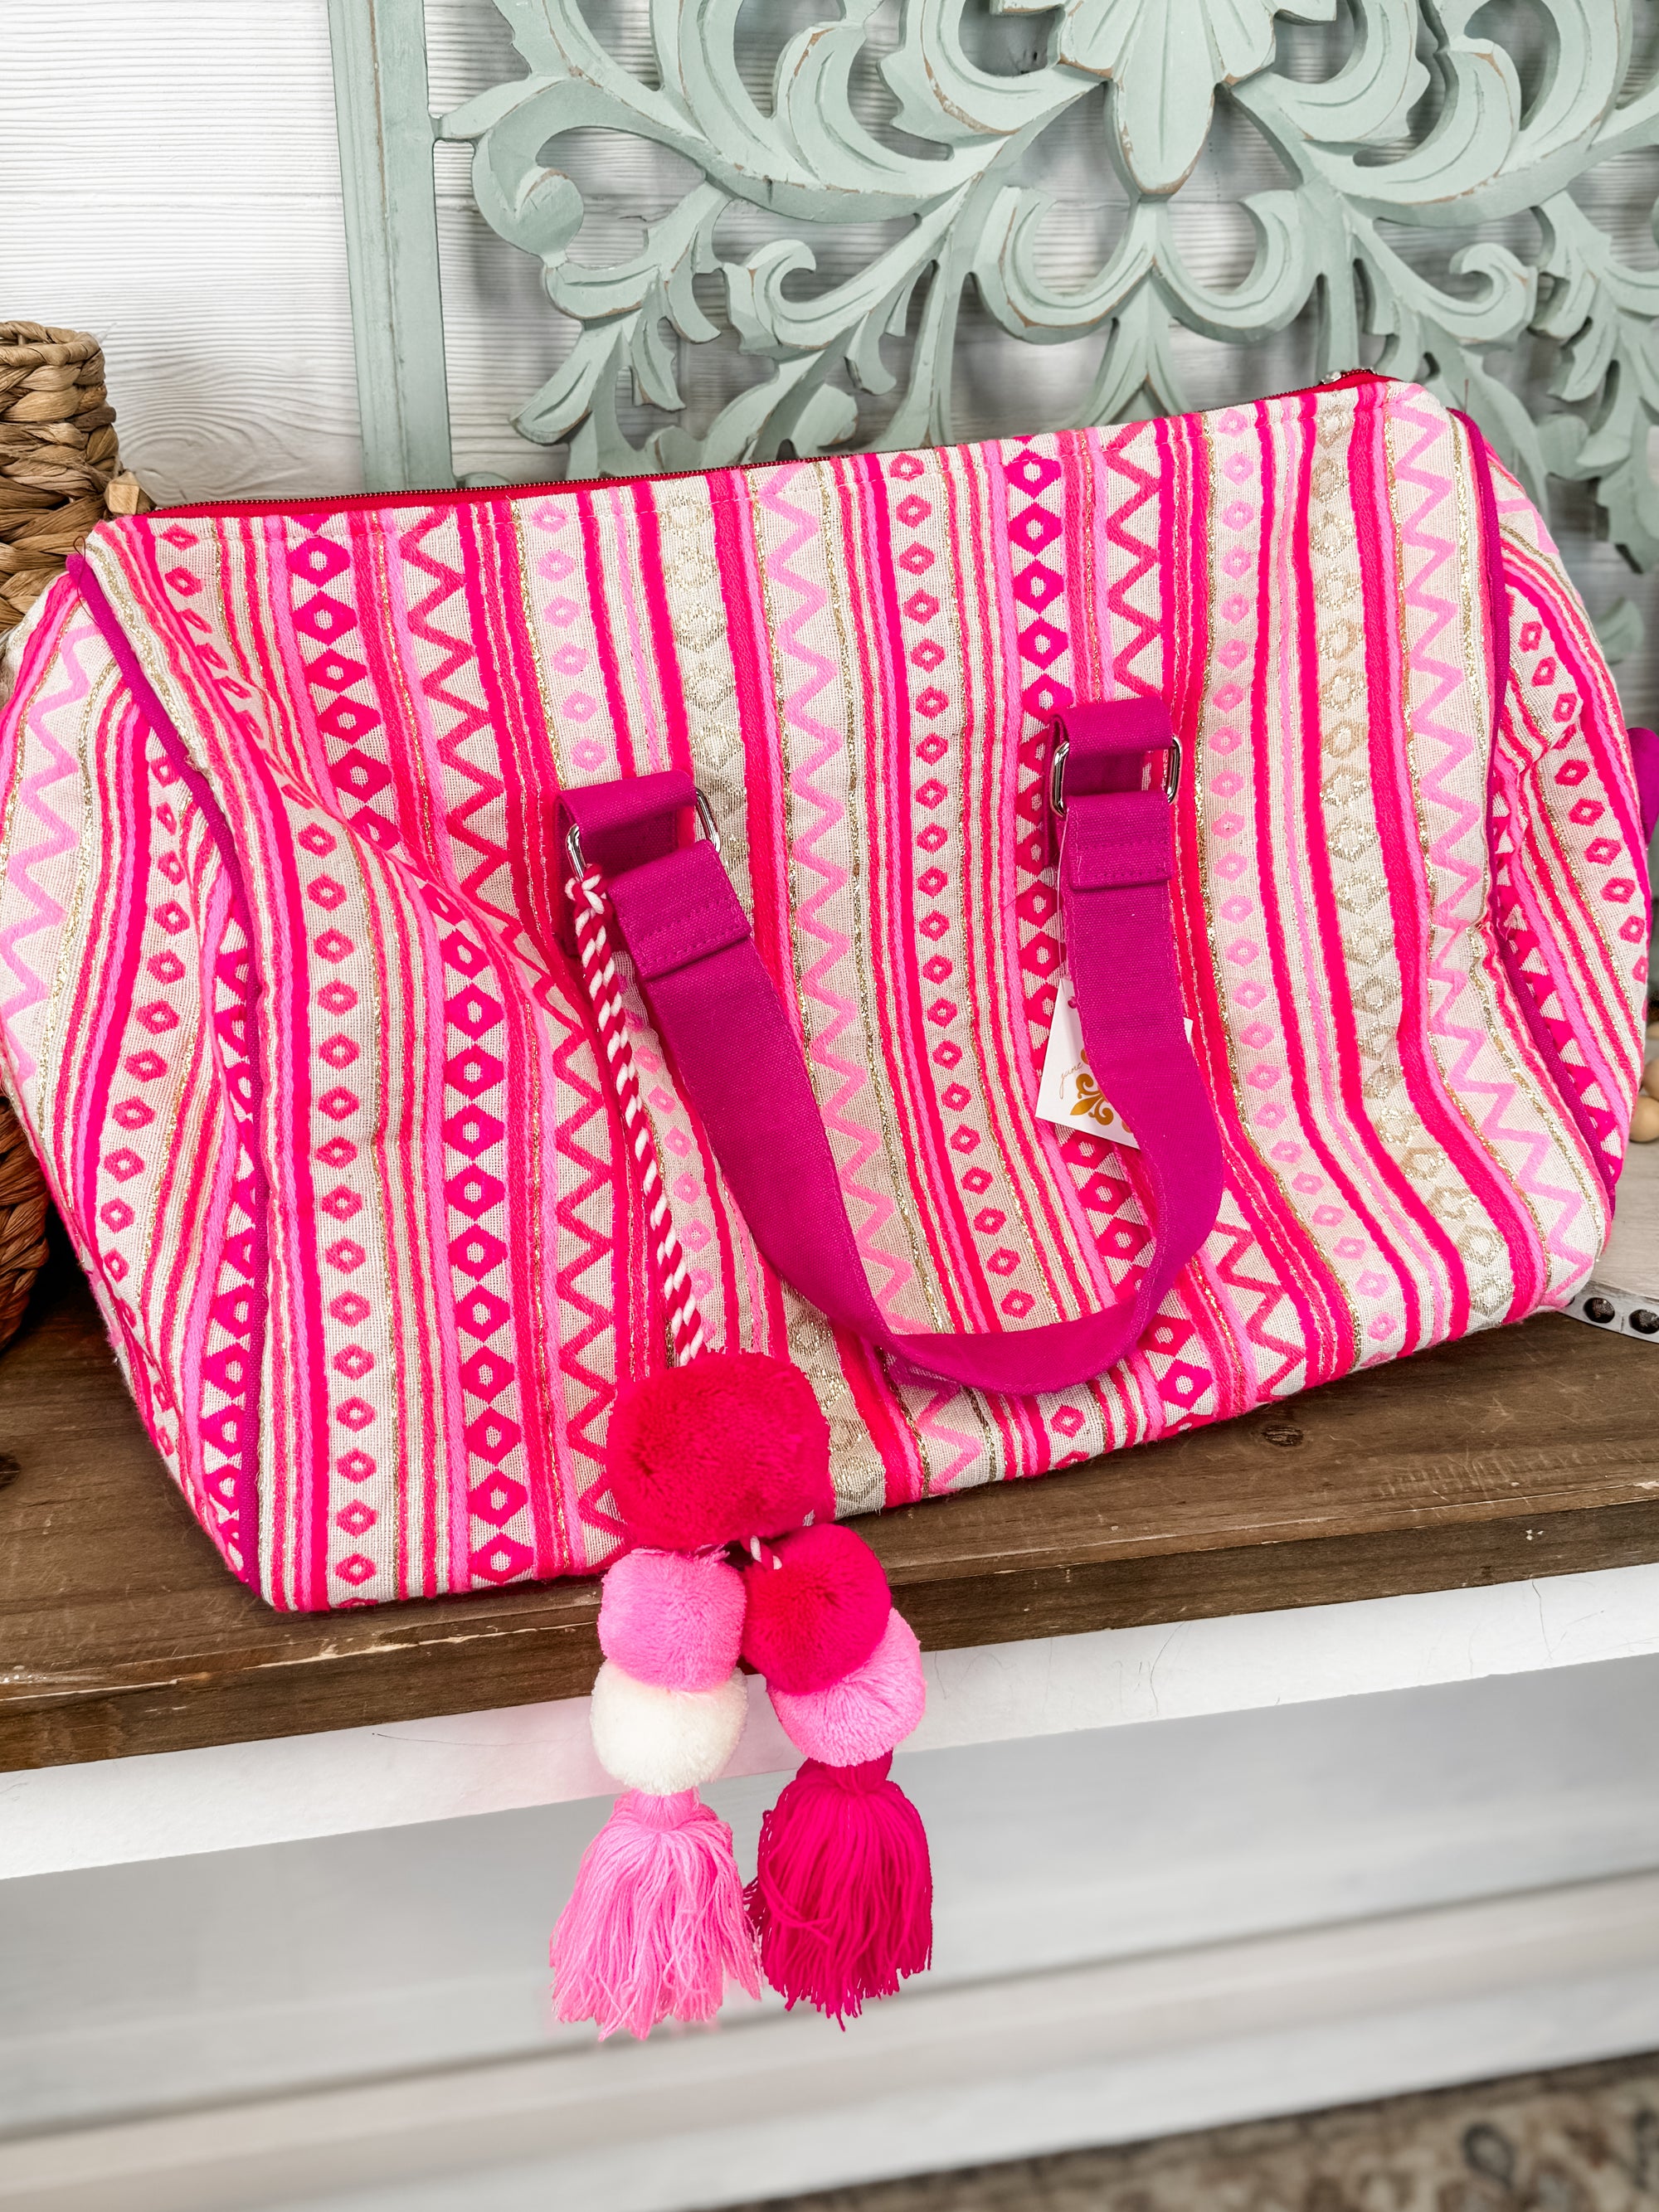 Poppin' Pink! Weekender Bag FINAL SALE